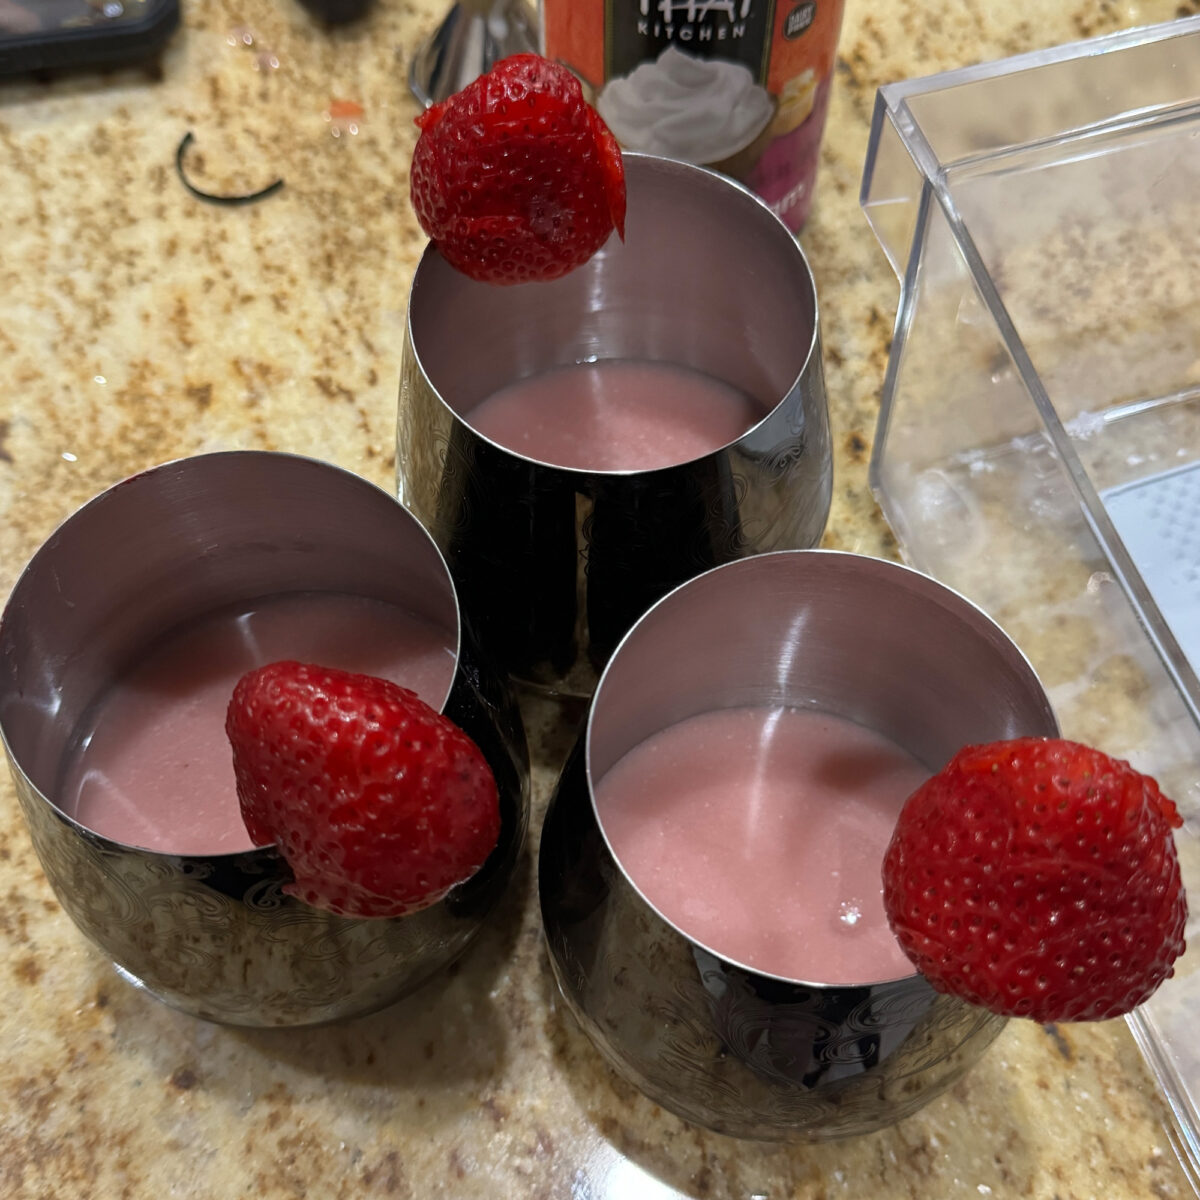 Strawberries and cream drinks